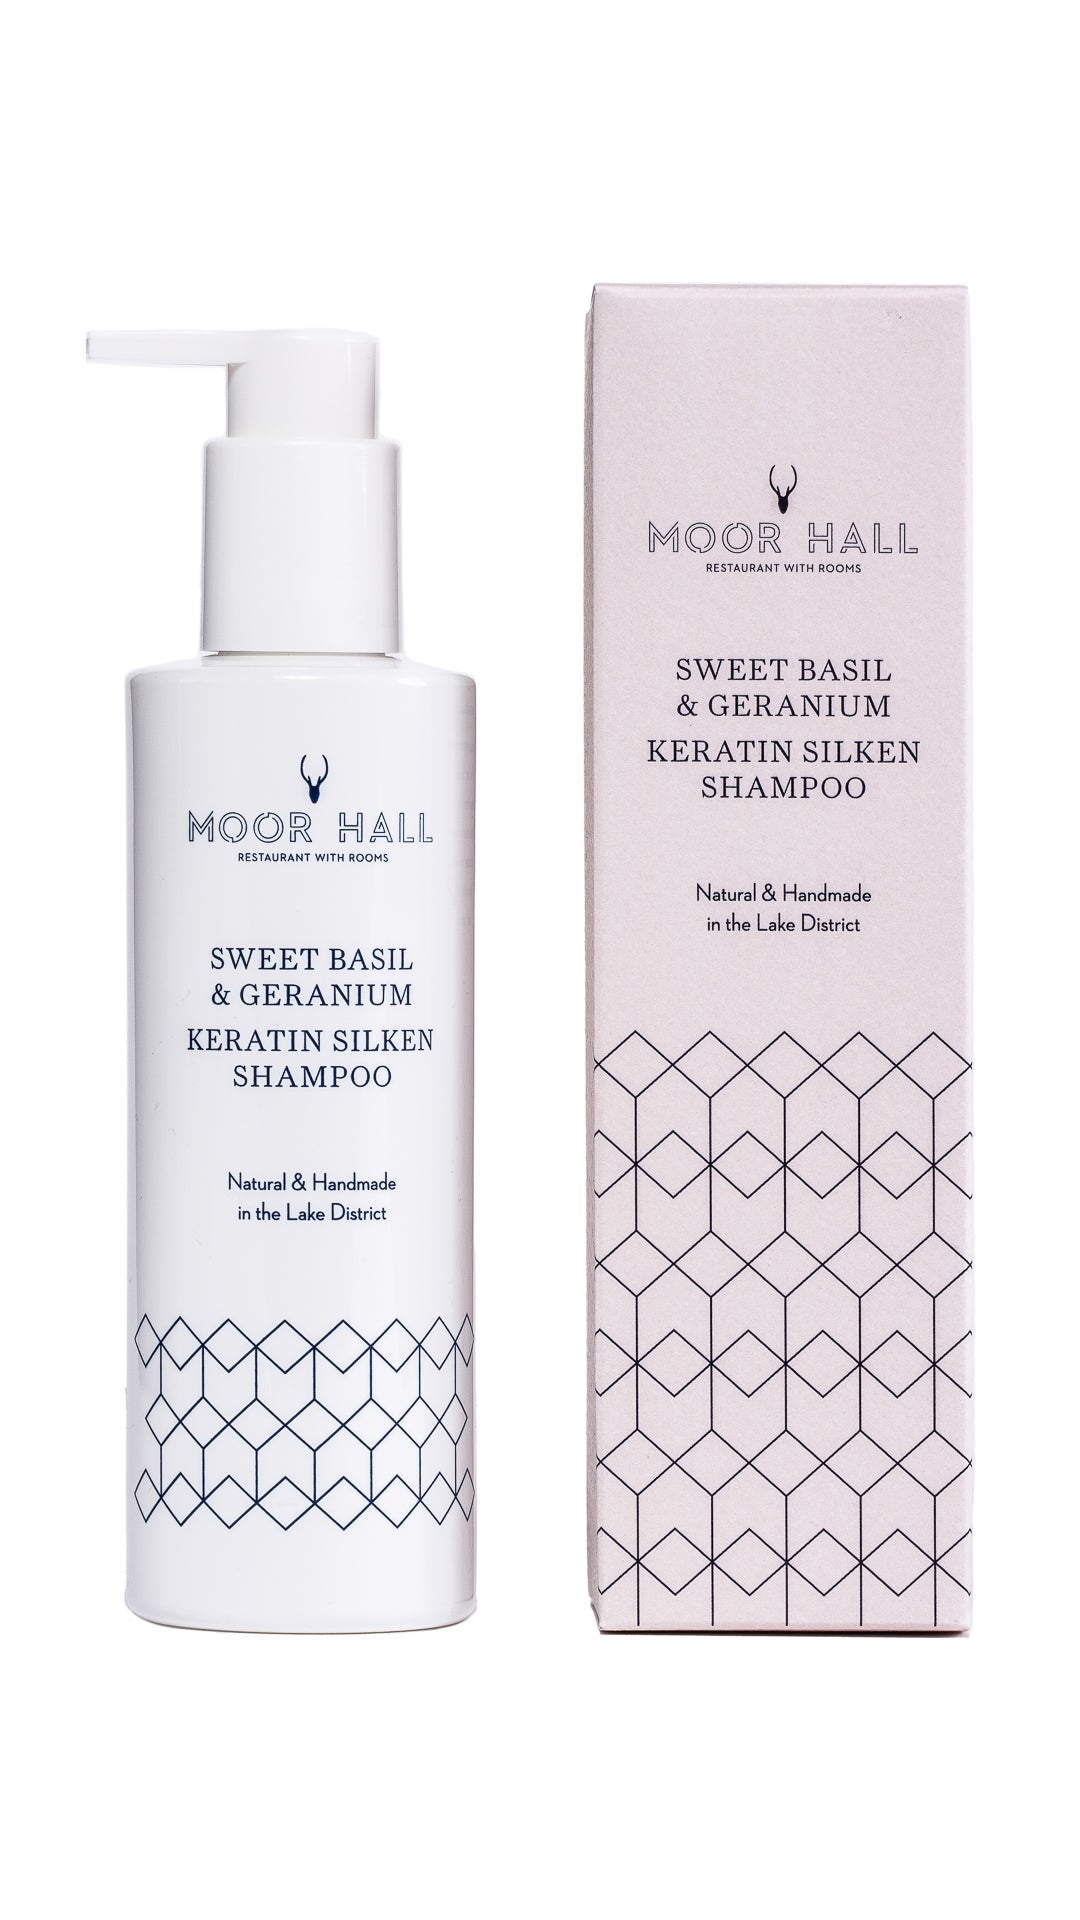 Moor Hall x Pure Lakes: Keratin silken shampoo & conditioner set